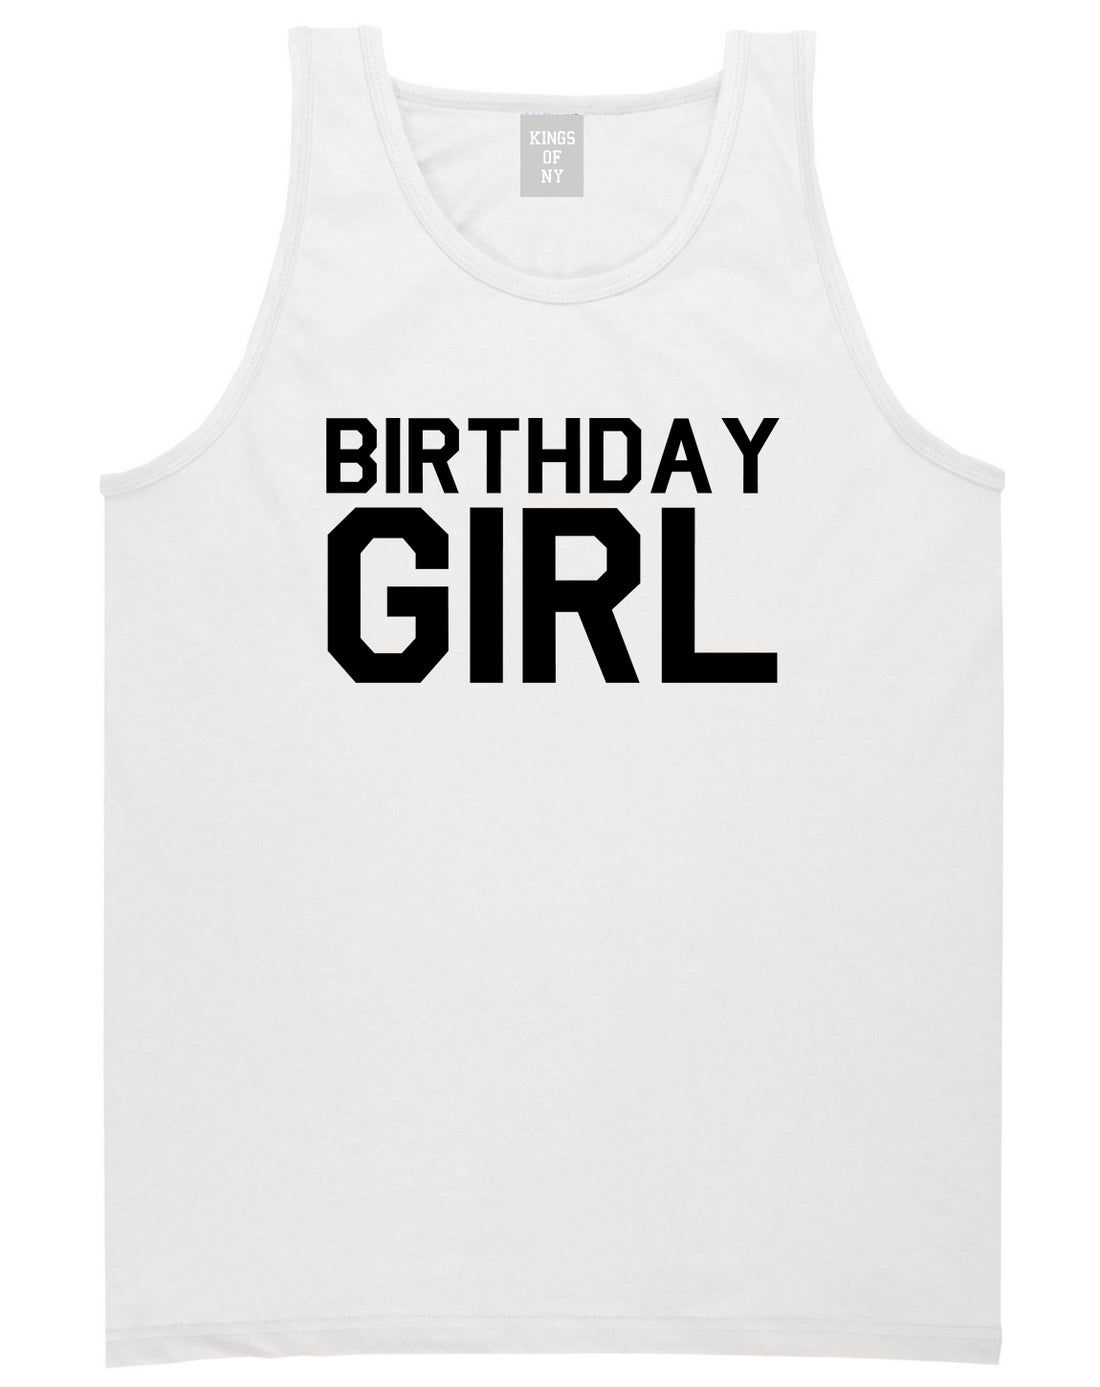 Birthday Girl White Tank Top Shirt by Kings Of NY